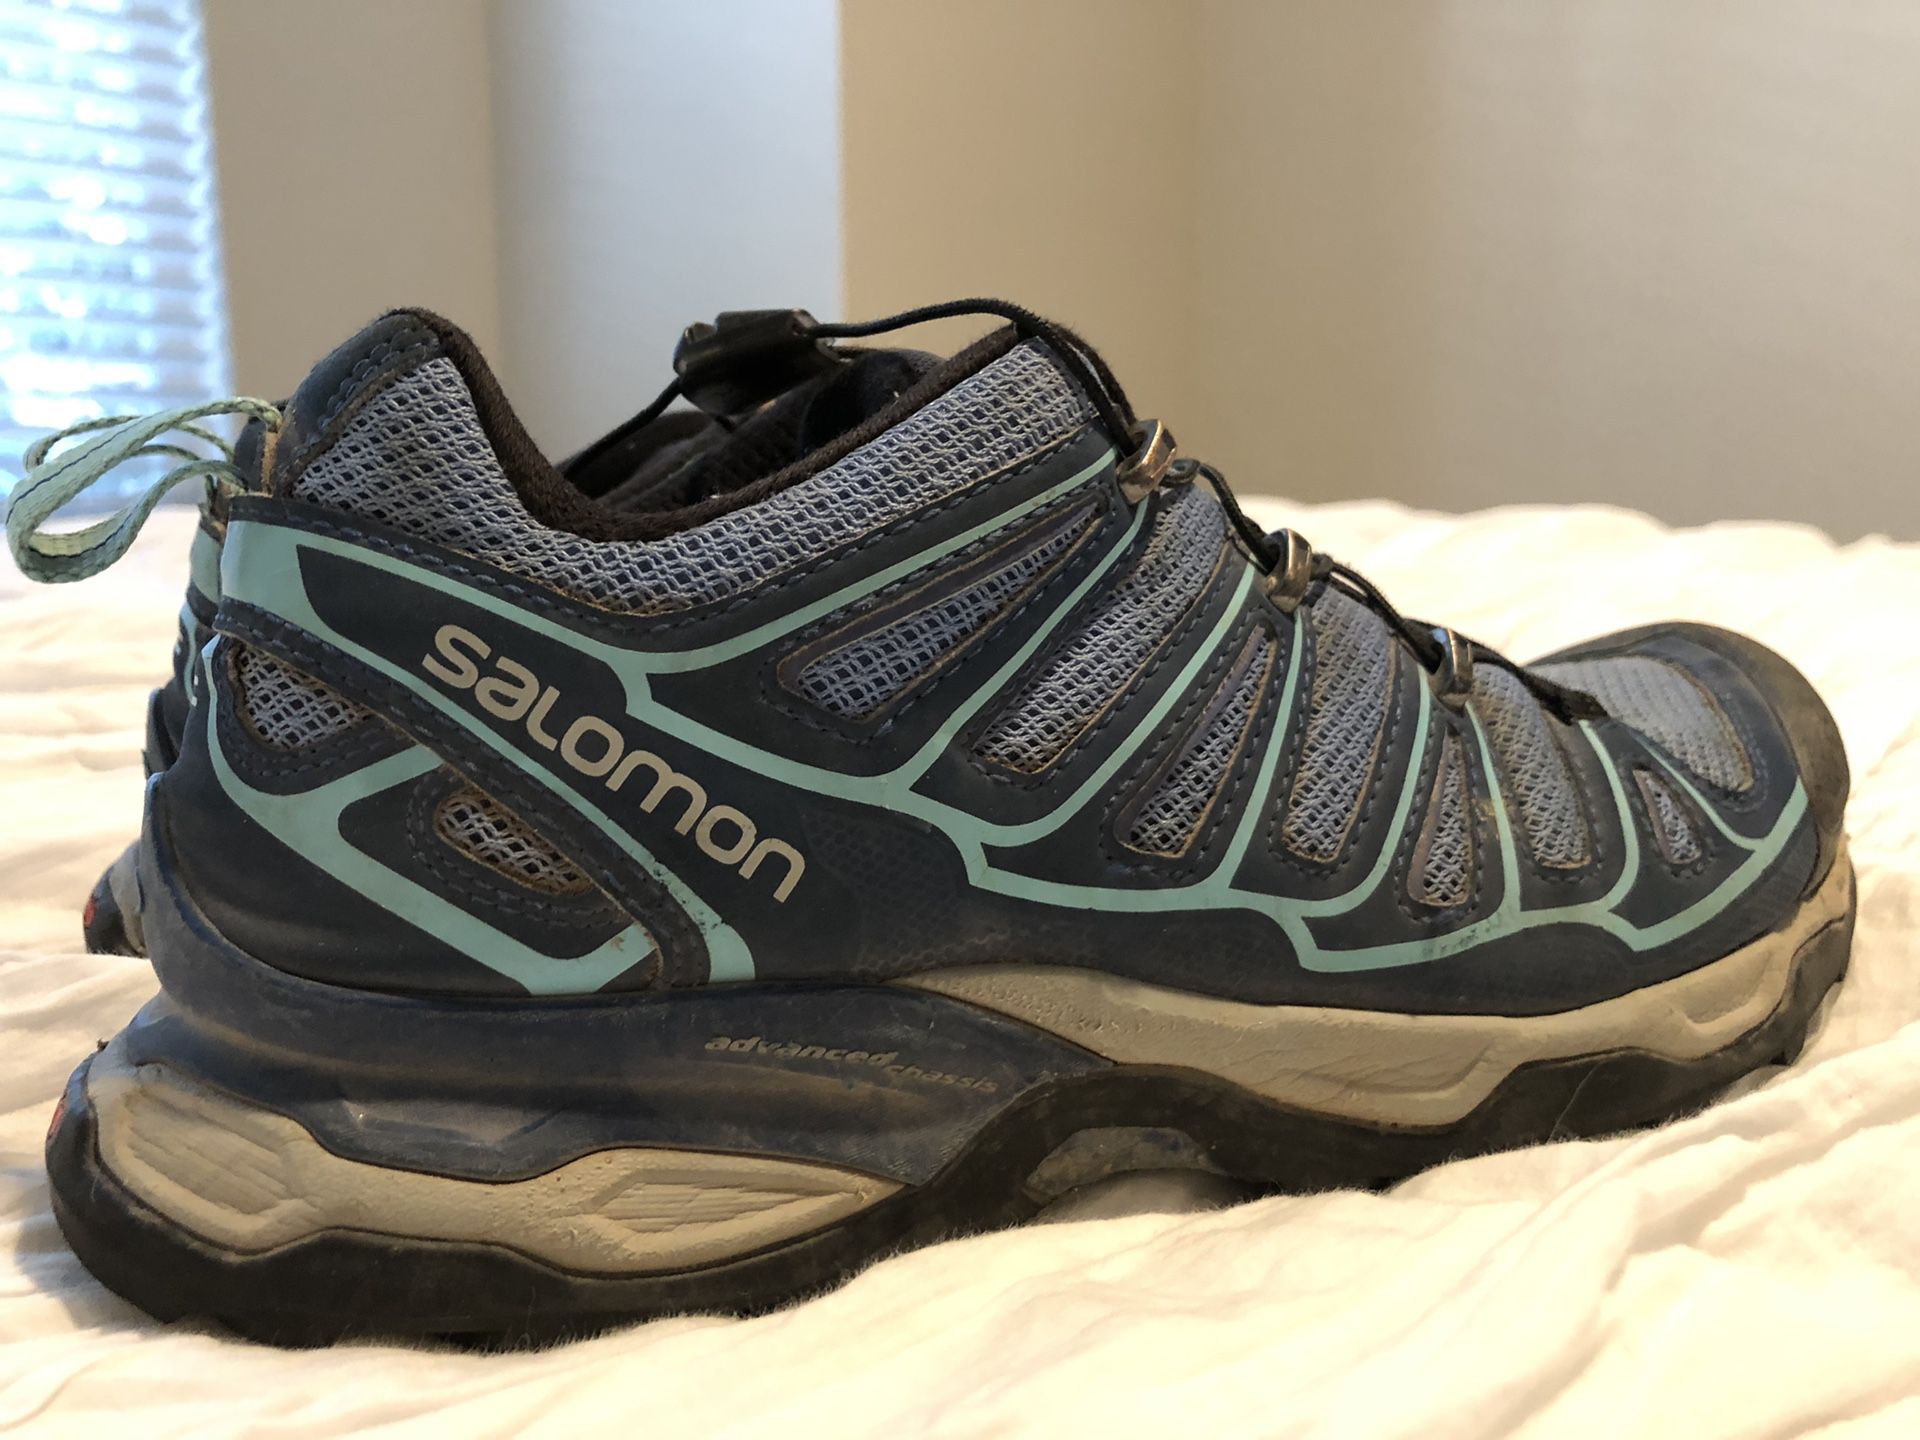 Salomon hiking shoes